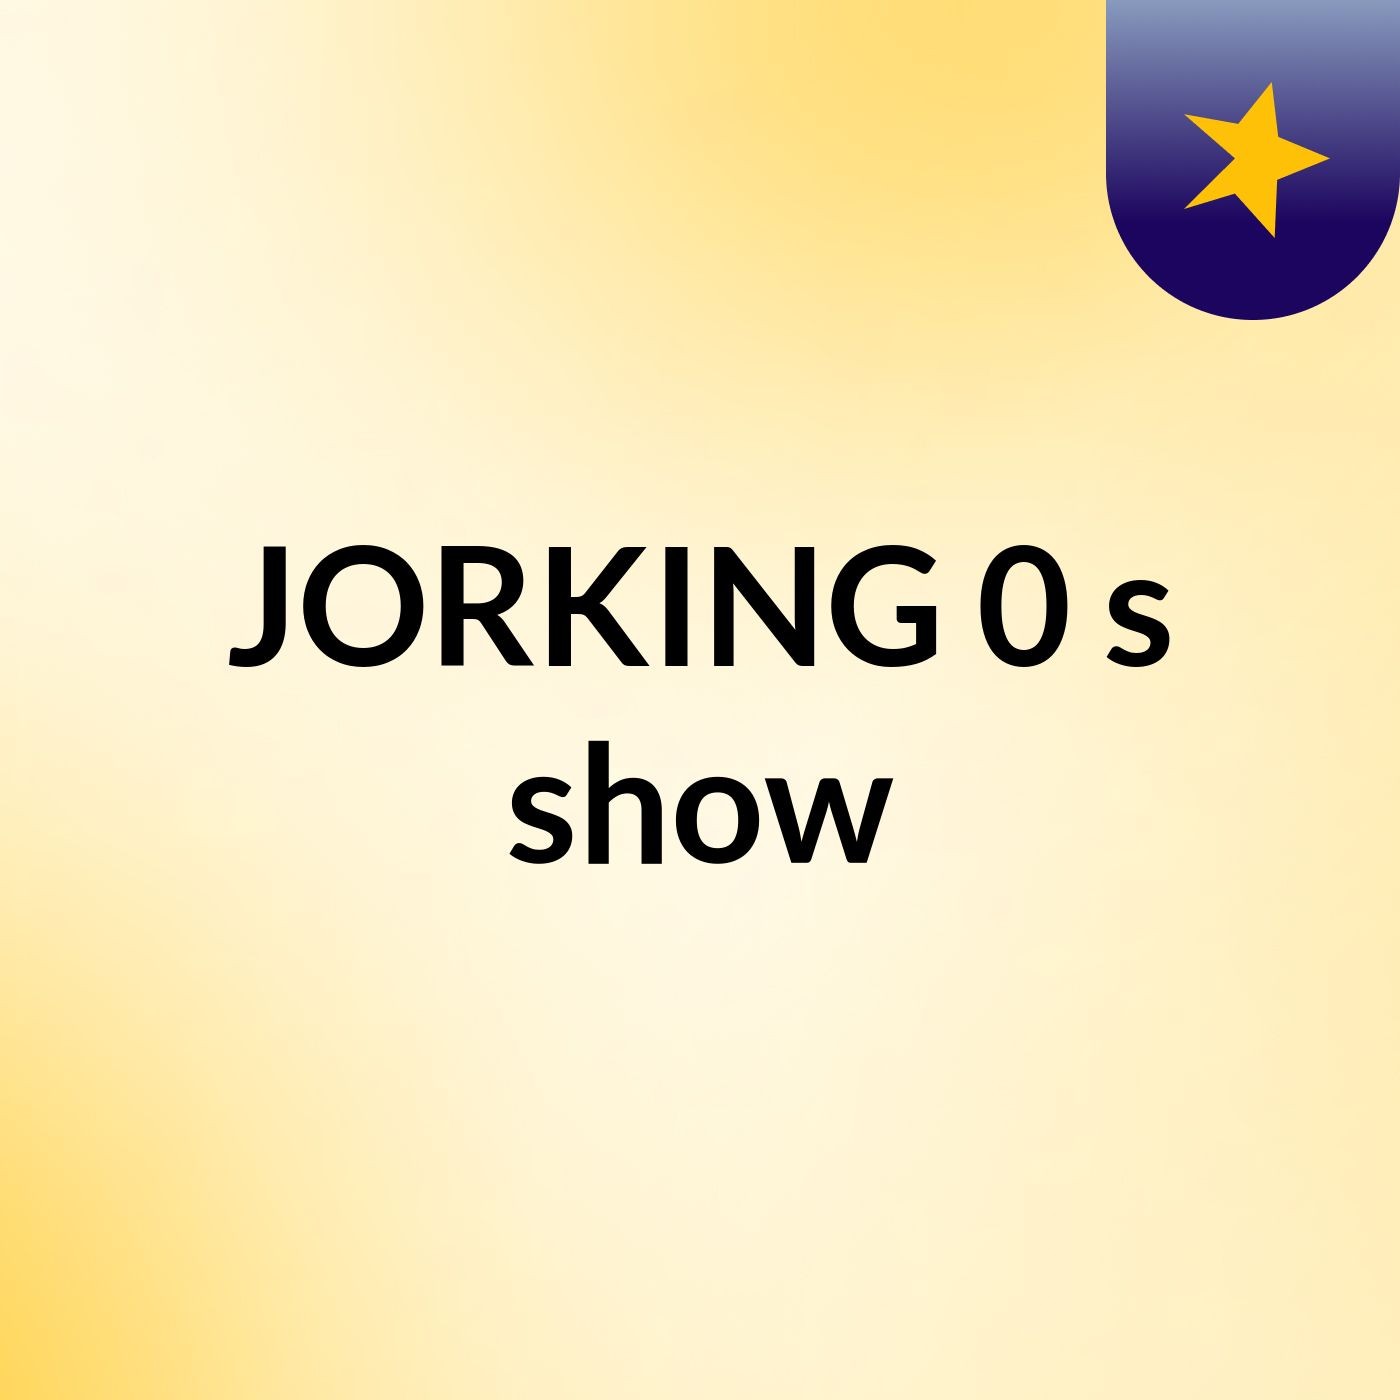 JORKING 0's show